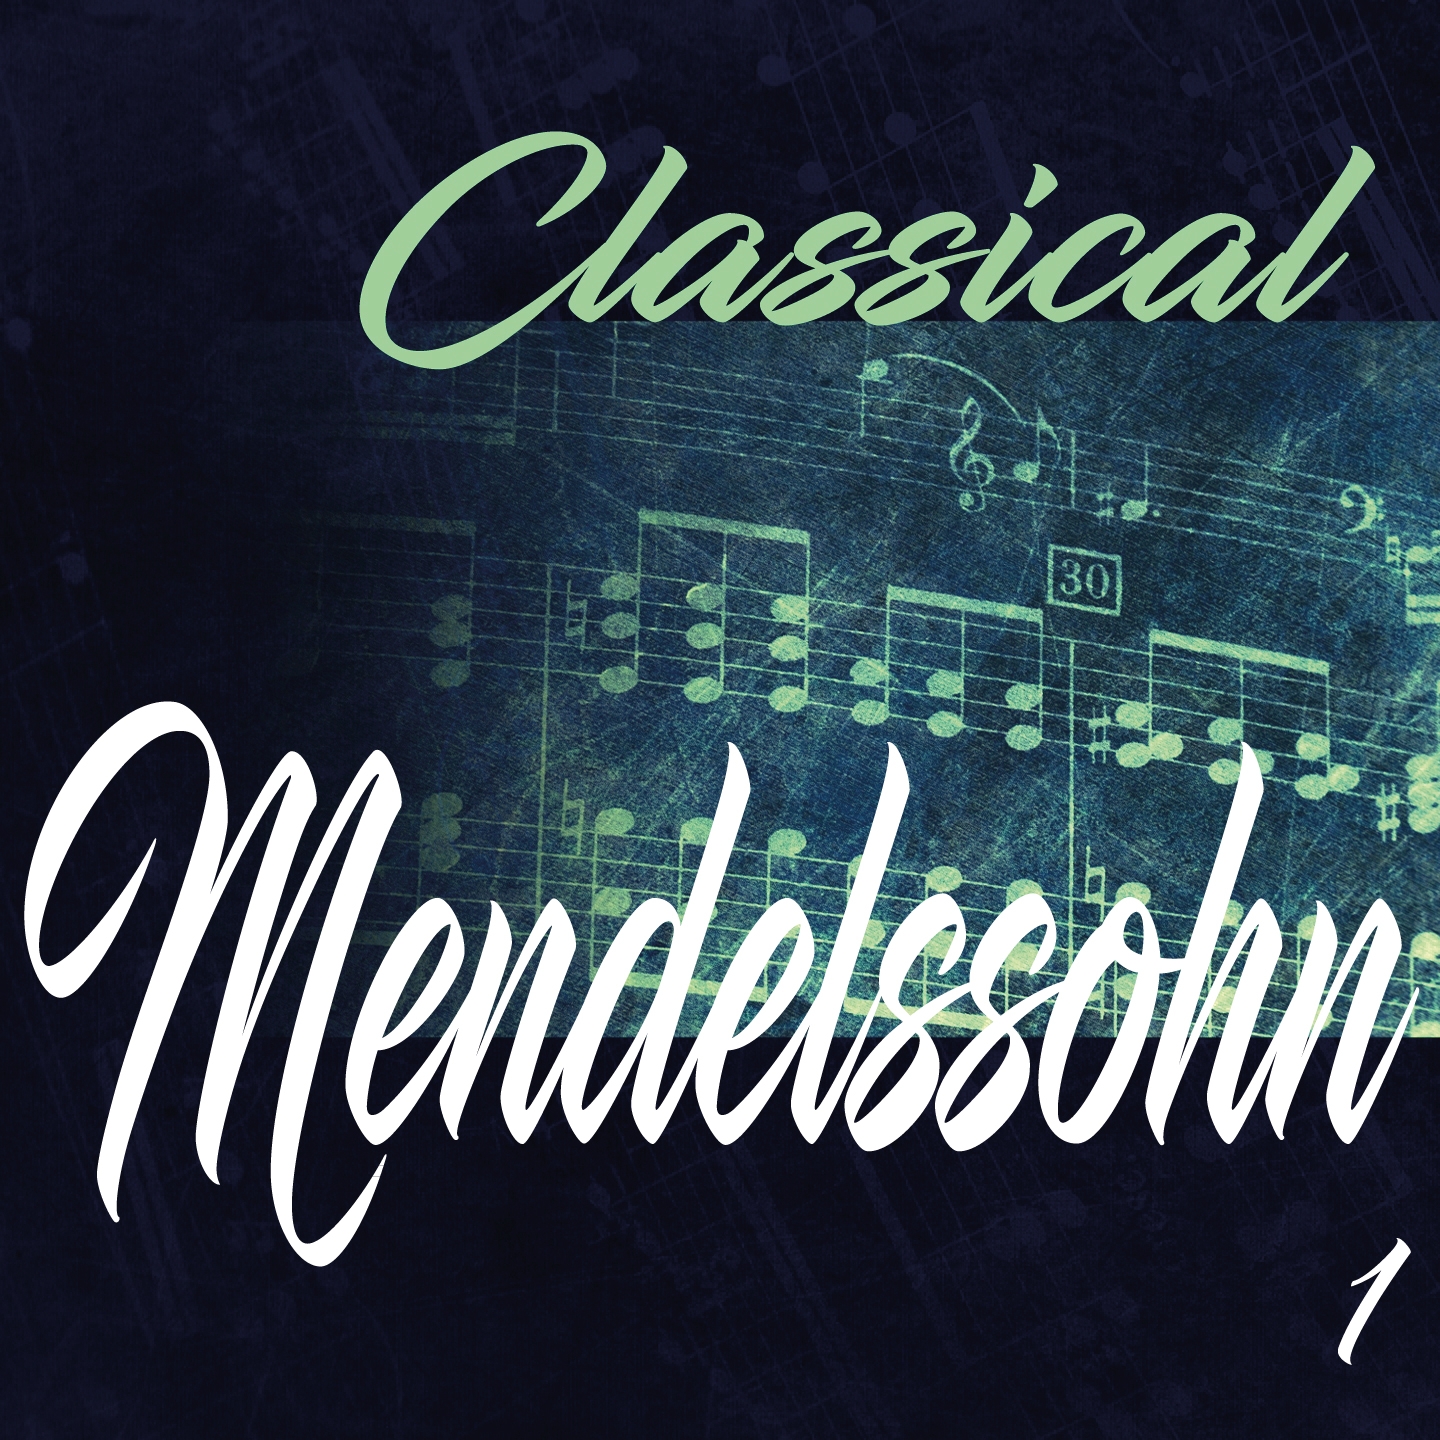 Classical Mendelssohn 1